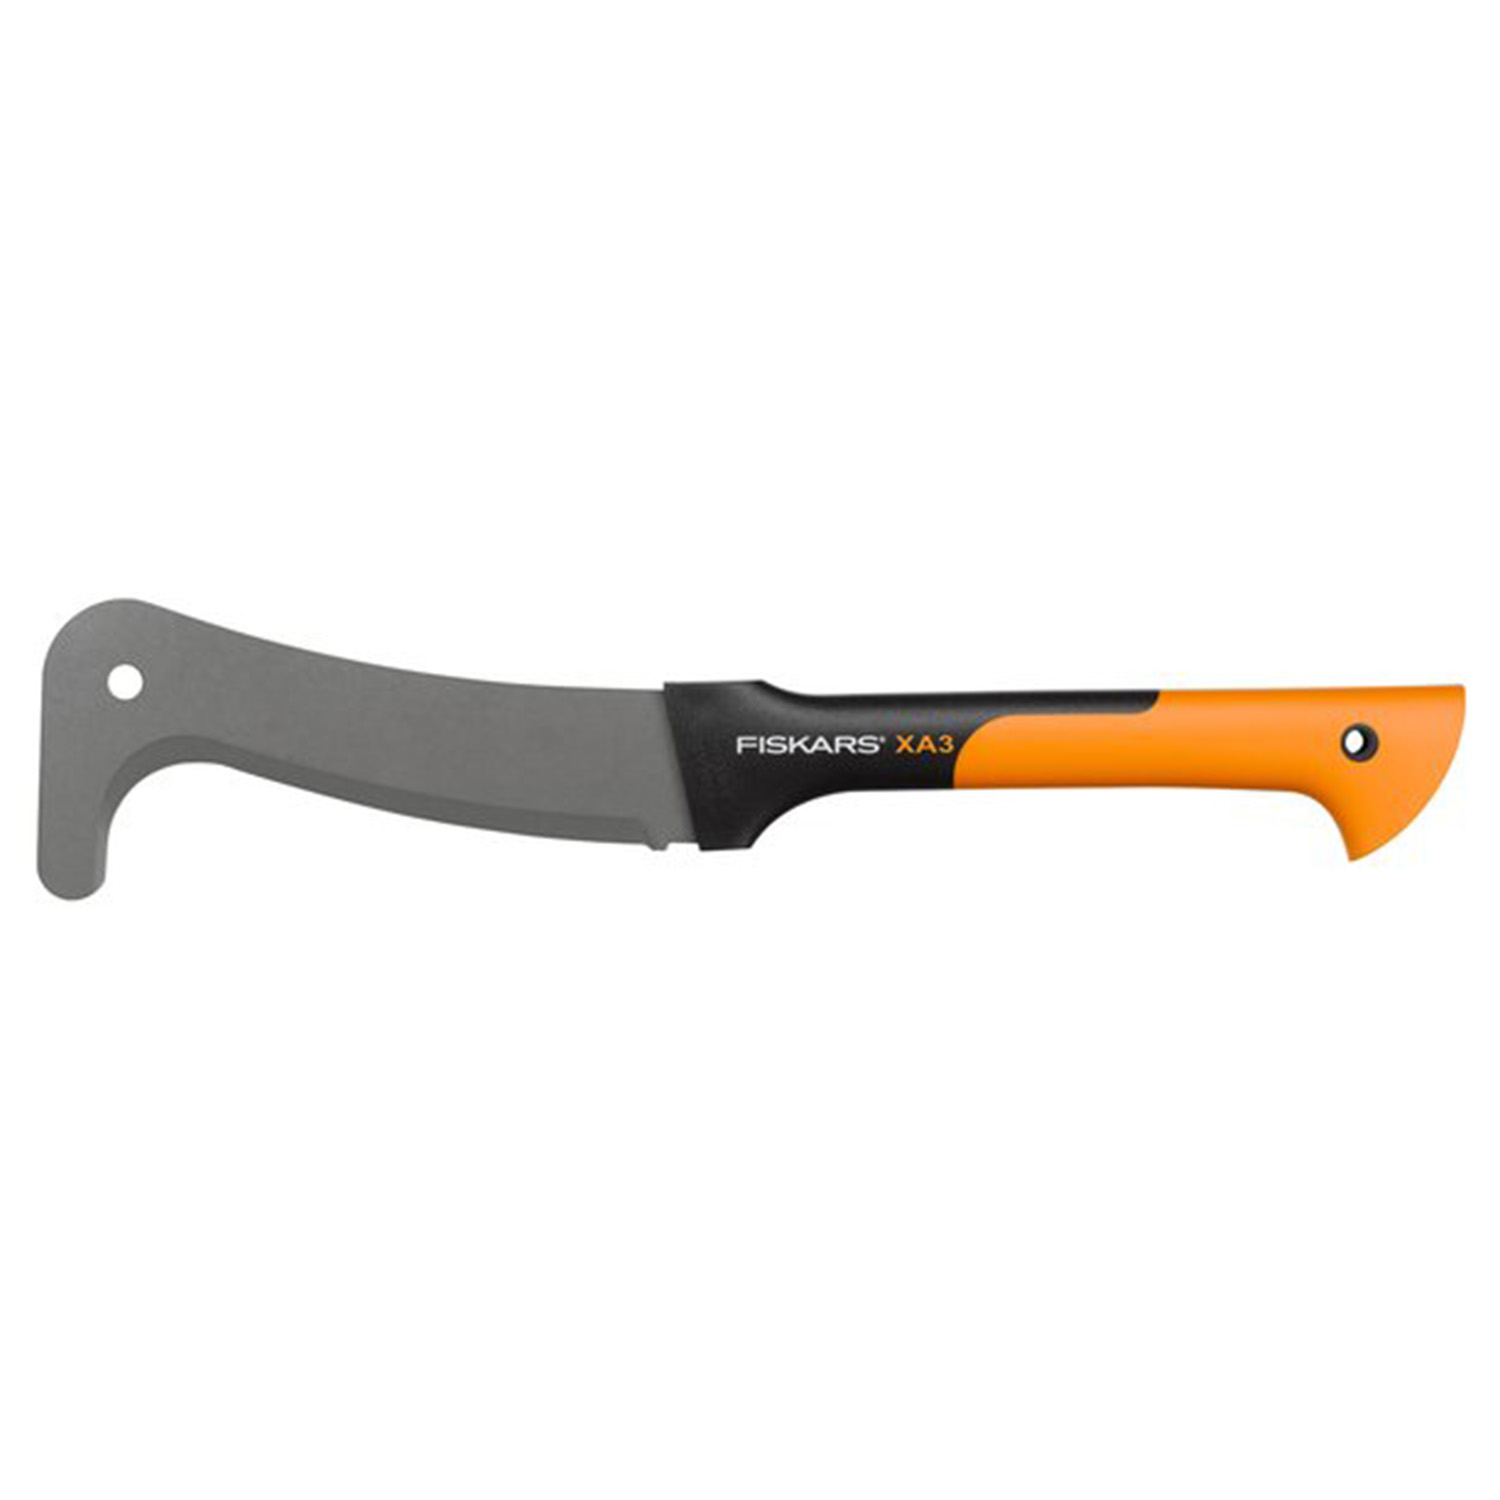 Fiskars machete woodxpert XA3 - Hunting Knives